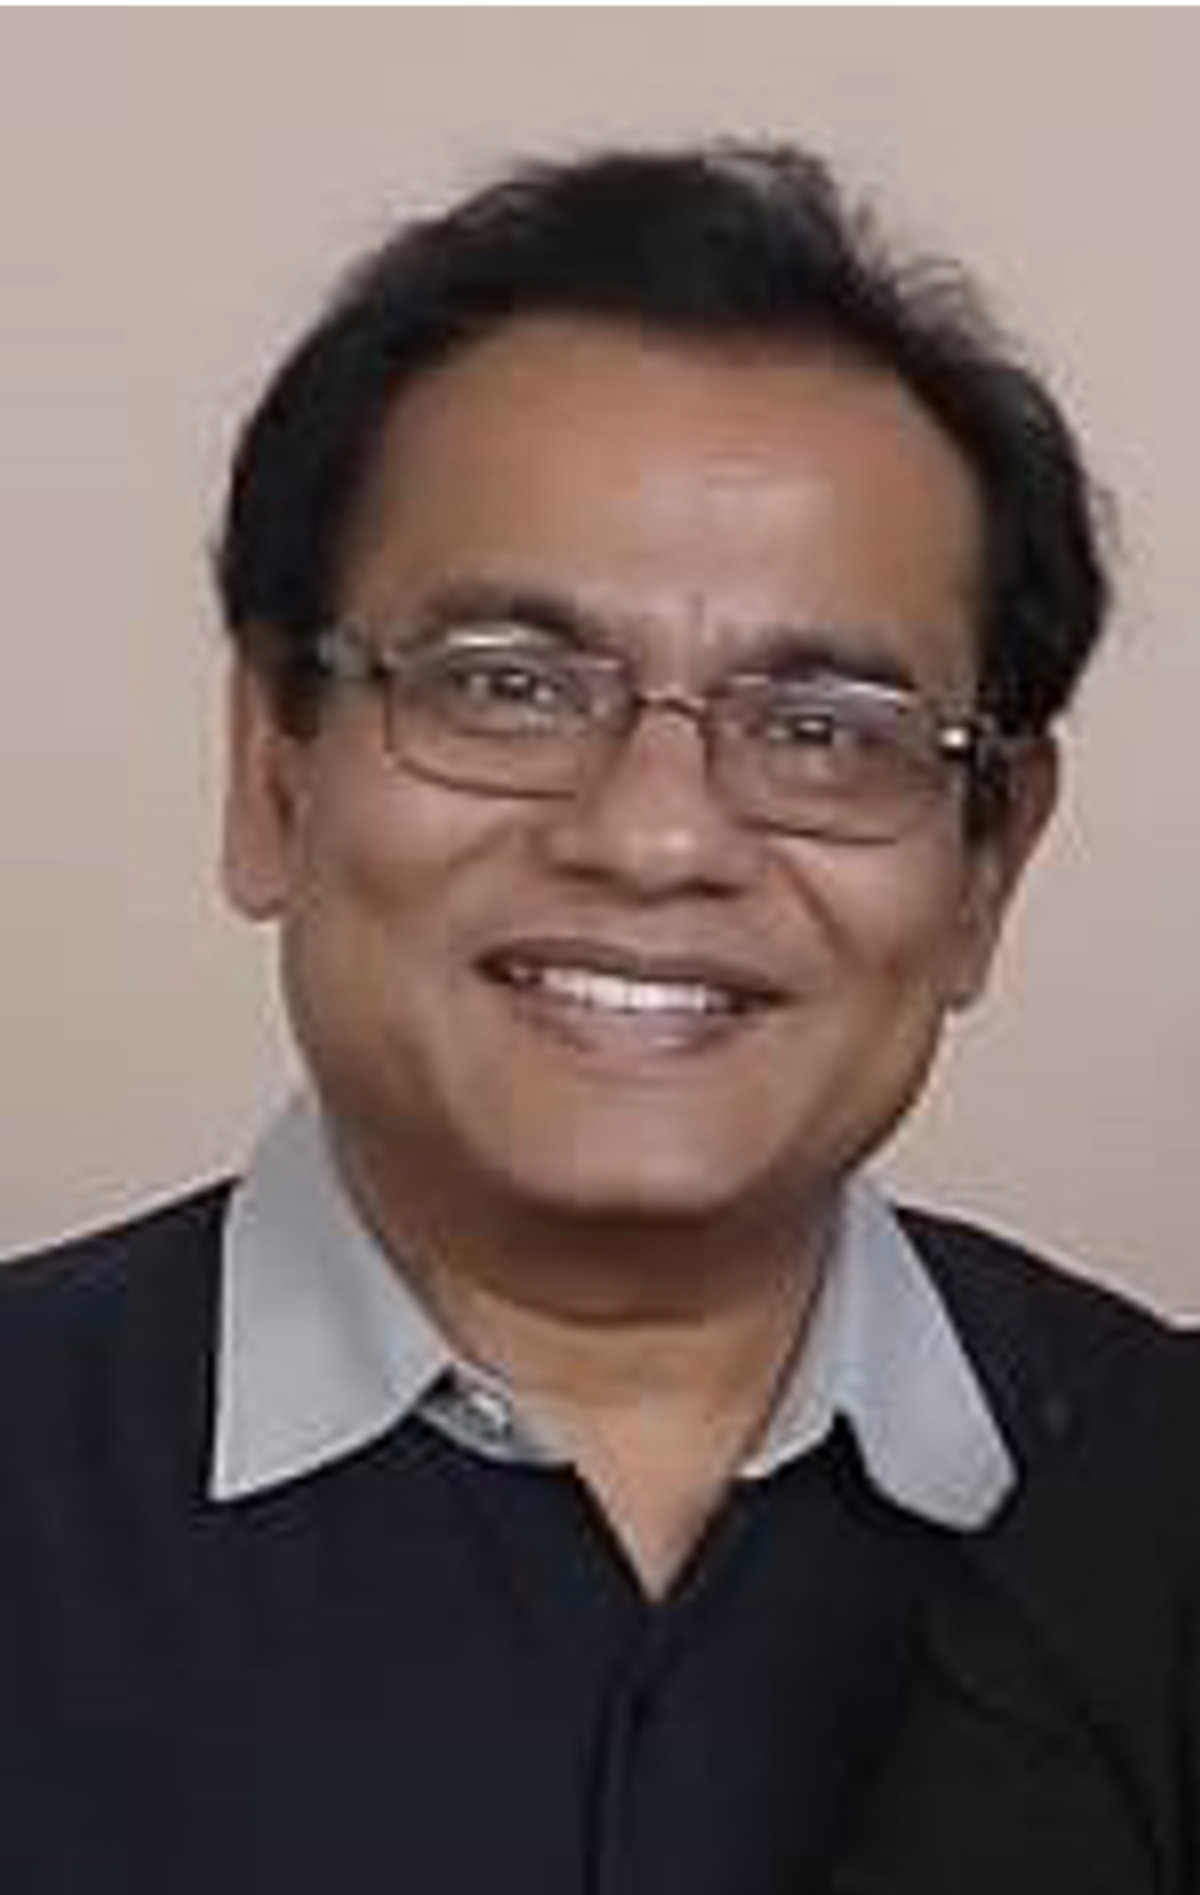 Head shot of Tribikram Kundu, wearing glasses and smiling